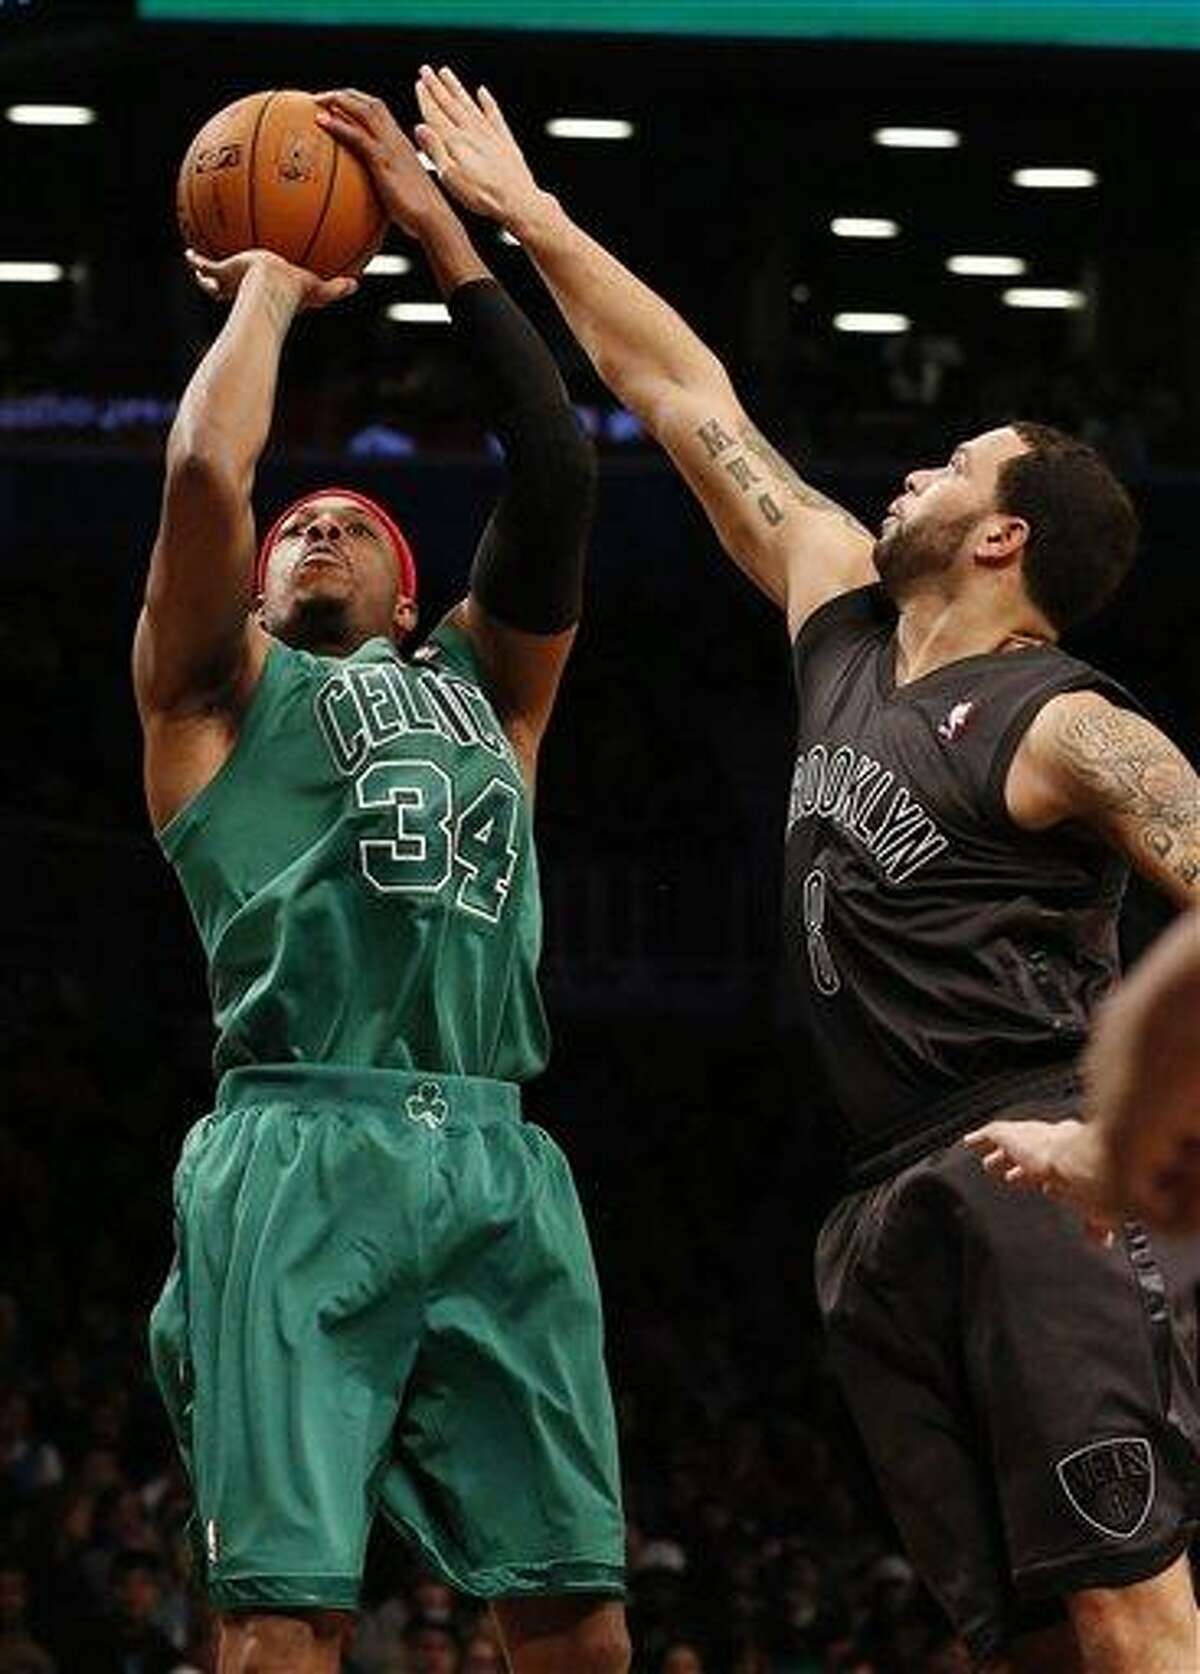 Boston Celtics forward Paul Pierce (34) shoots against Brooklyn Nets guard Deron Williams (8) in the second half of their NBA basketball game at Barclays Center, Tuesday, Dec. 25, 2012, in New York. Boston won 93-76. (AP Photo/John Minchillo)